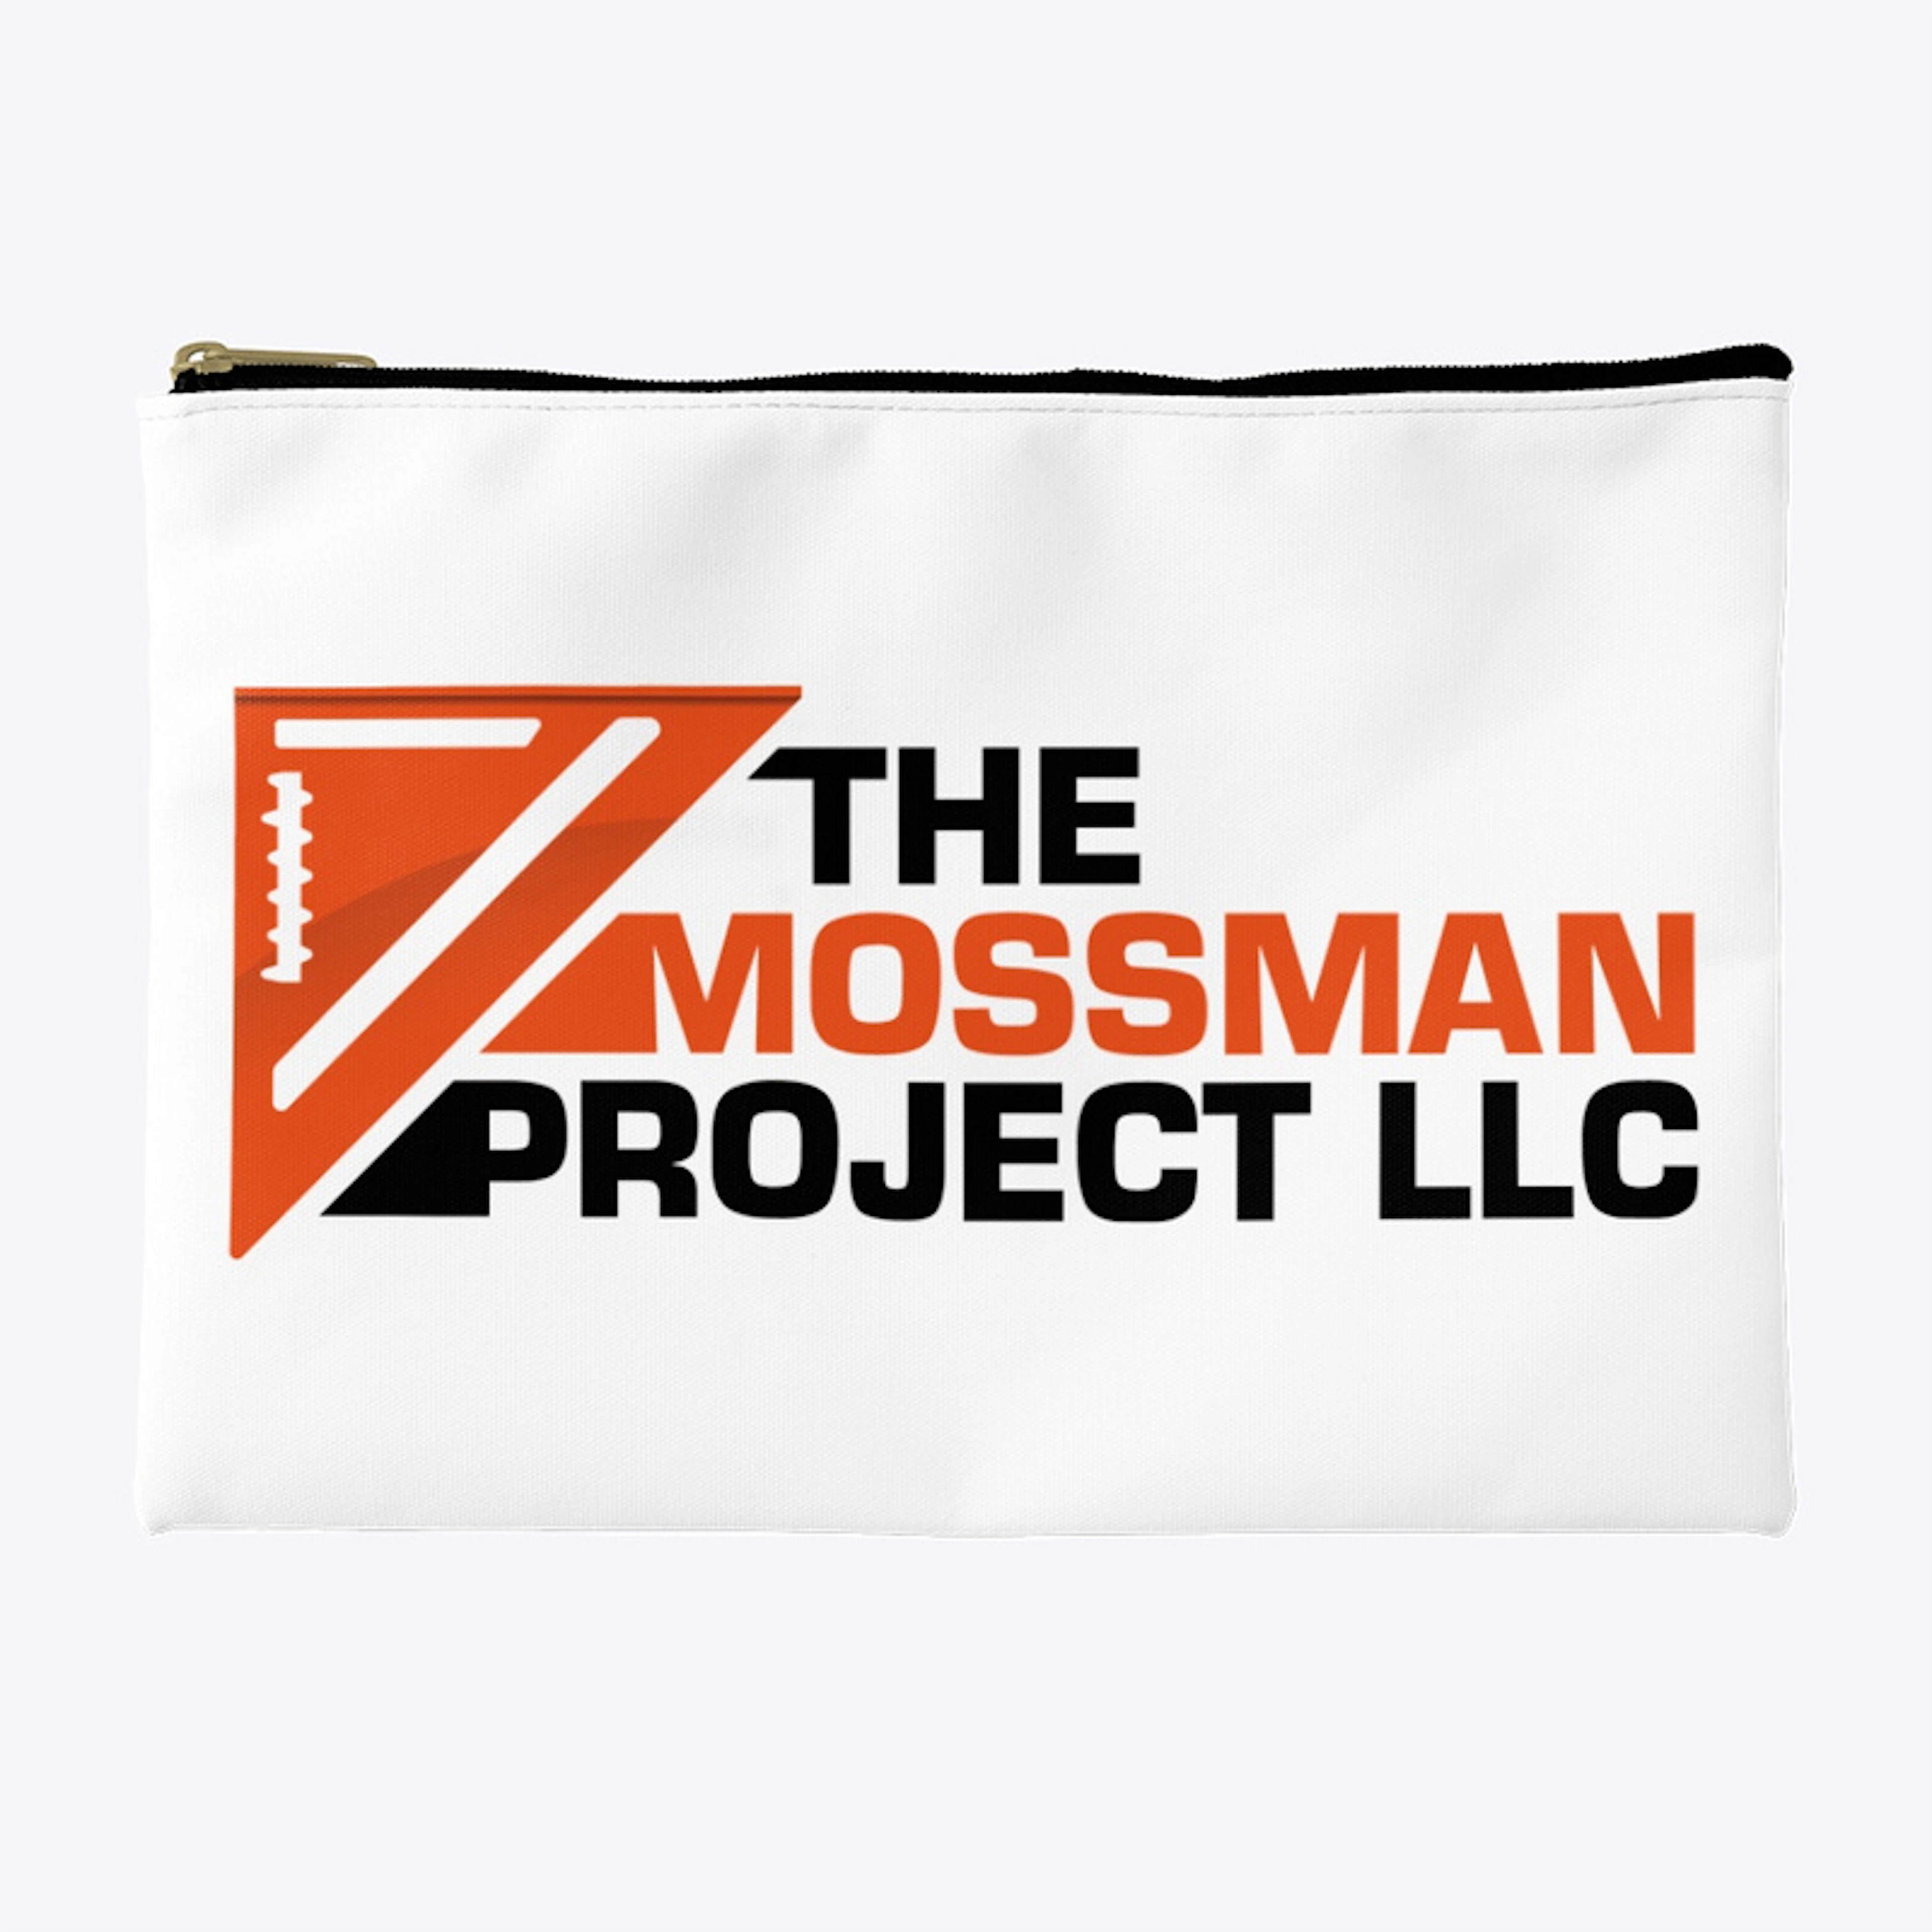 The Mossman Project LLC